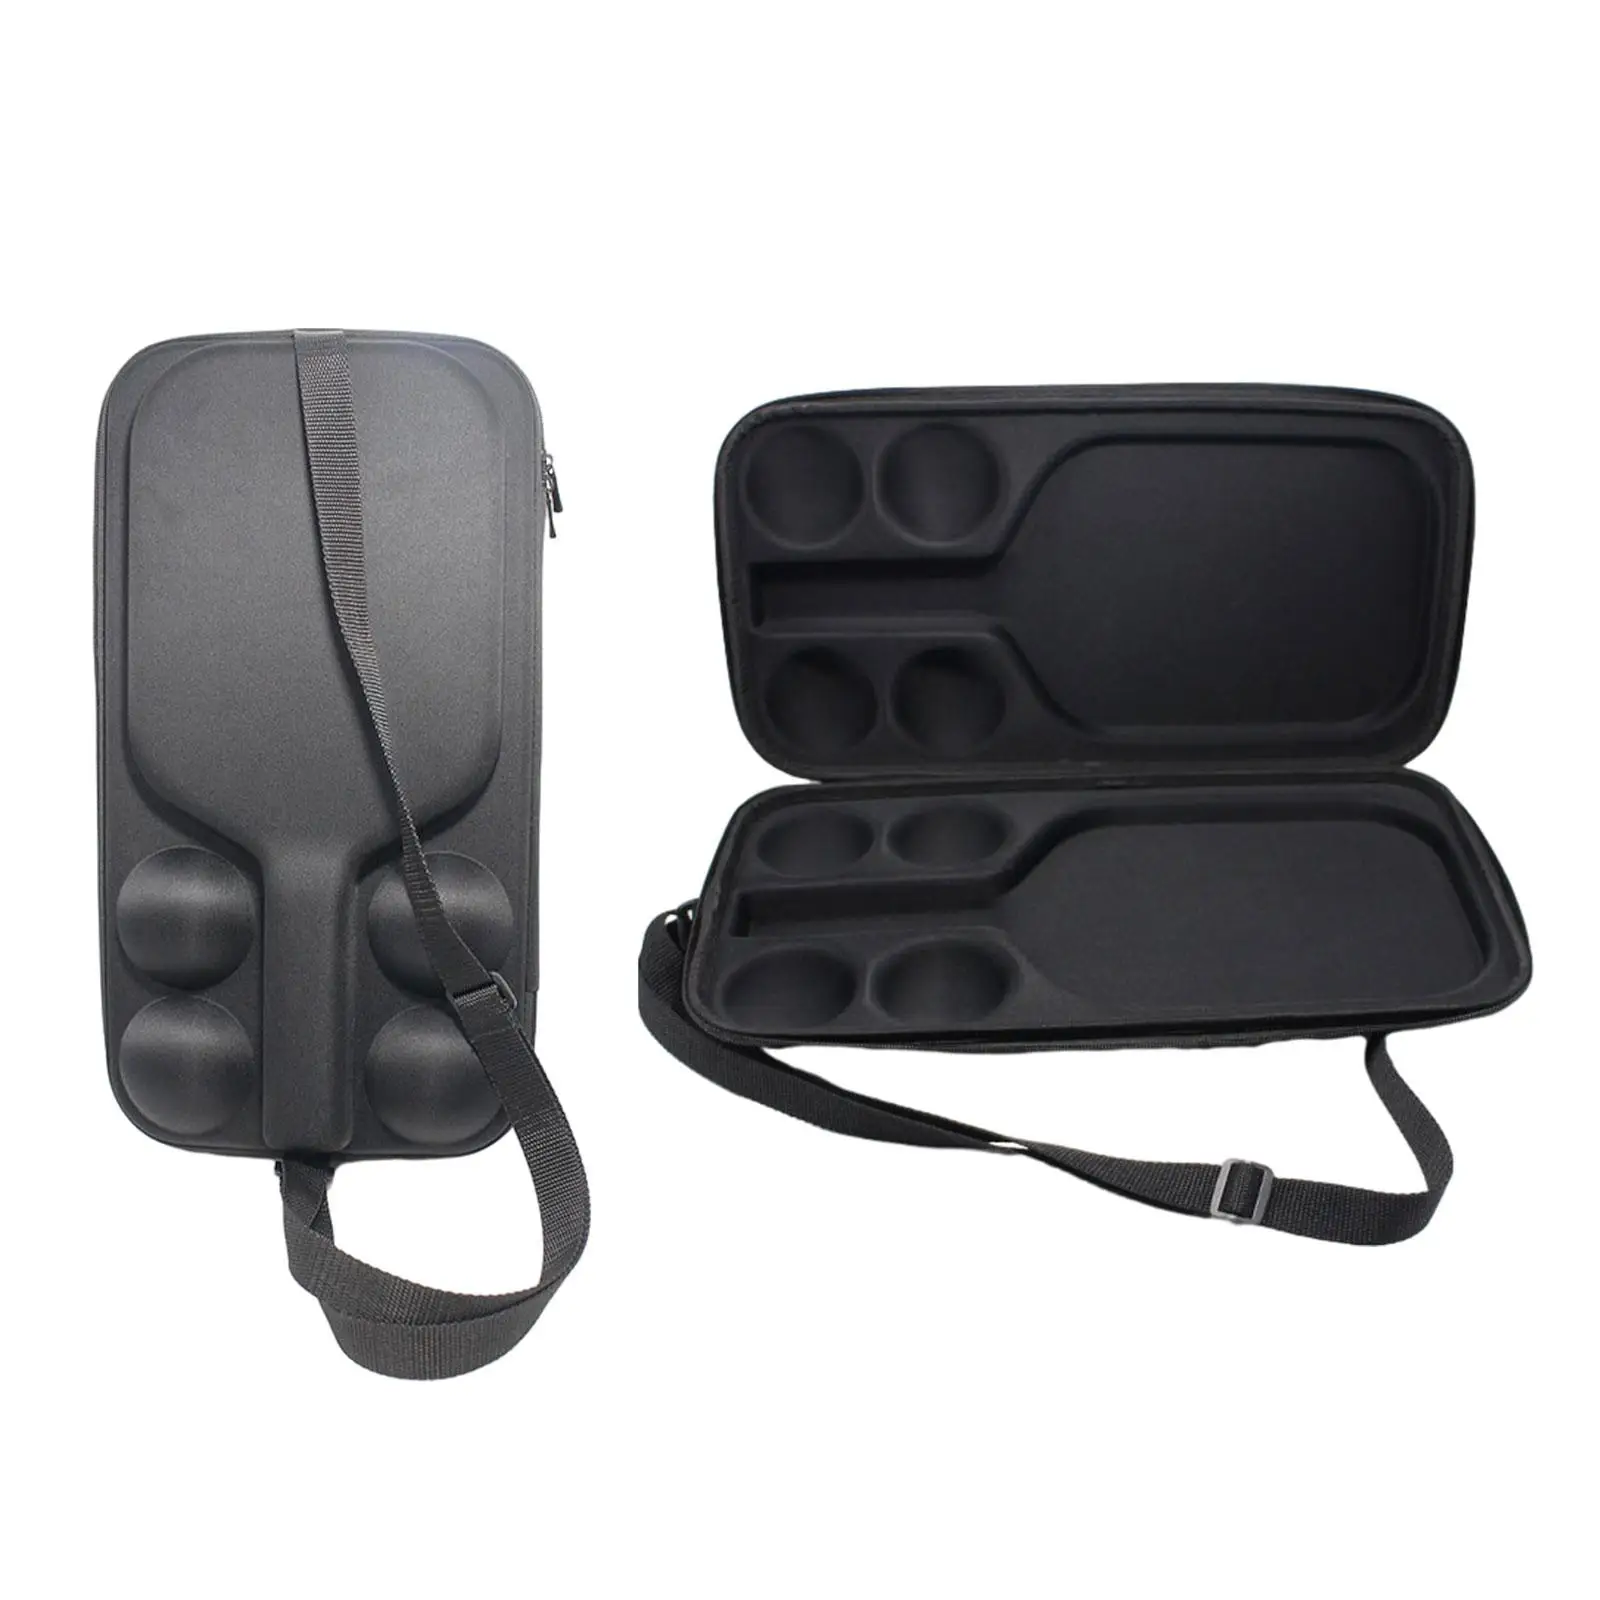 Table Tennis Racket Bag Racket Protective Bag Zipper Closure Carrying Bag Dustproof Handbag Paddle Sleeve for Outdoor Travel